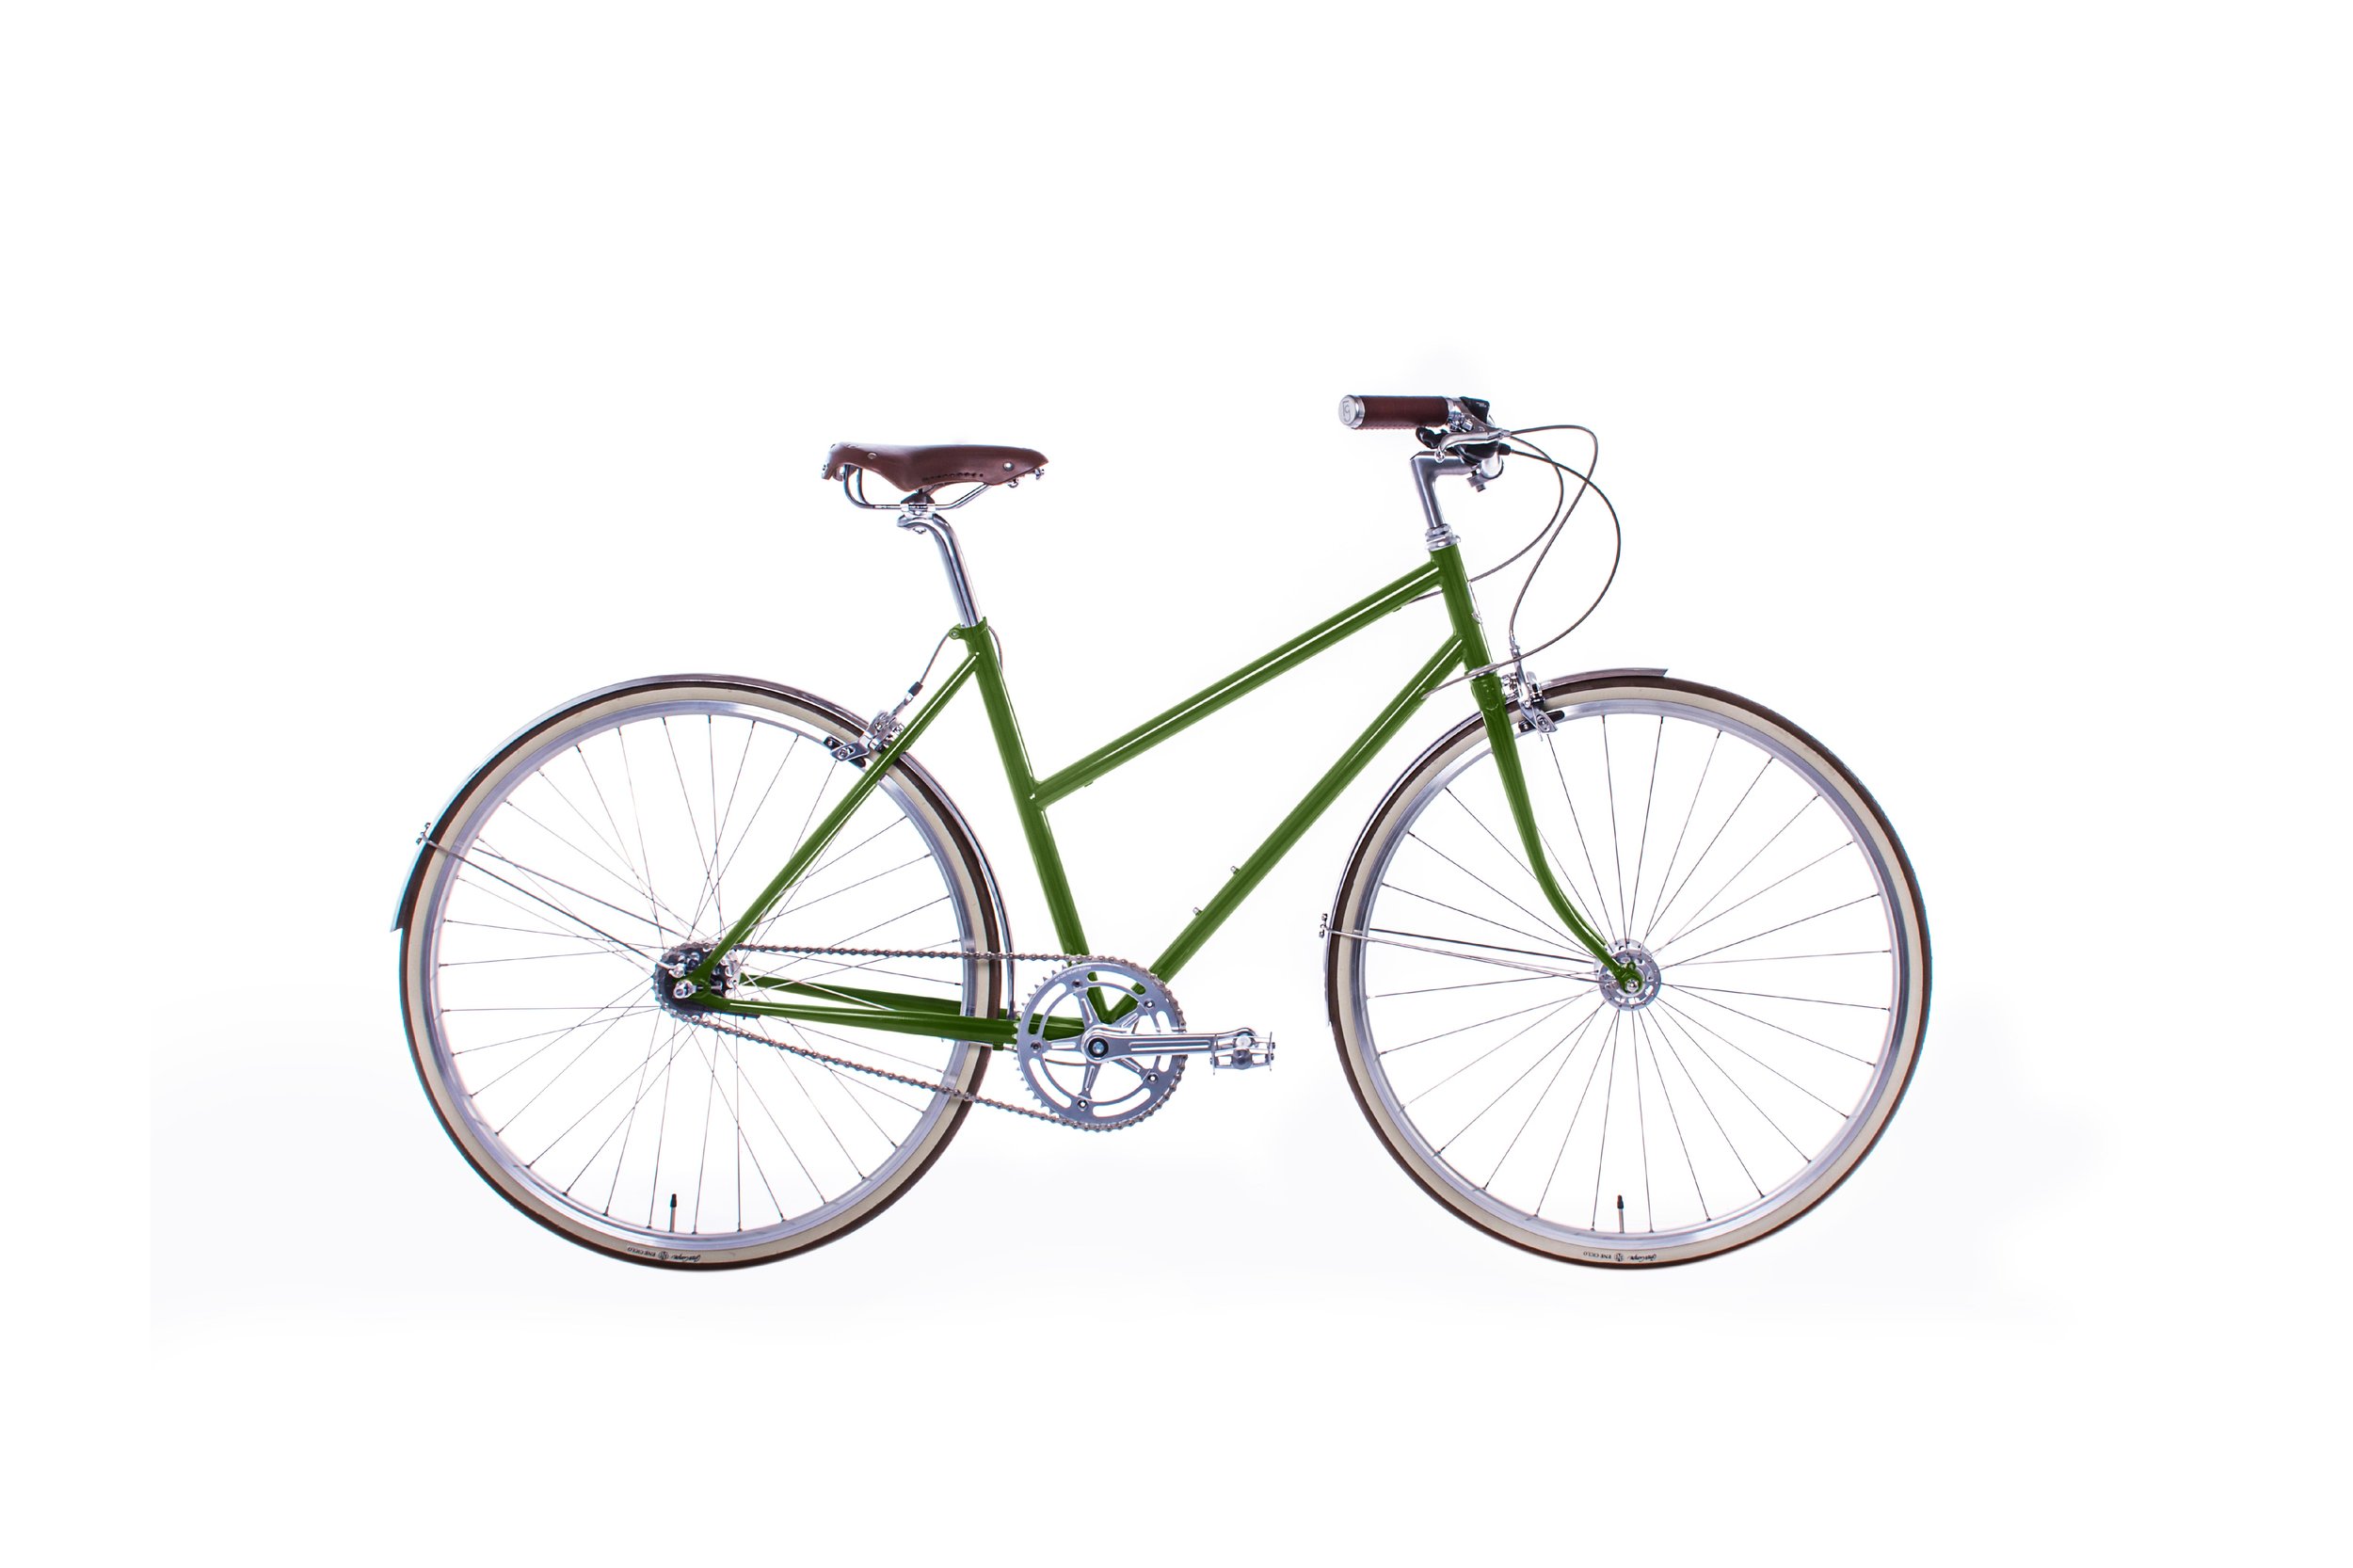 Freddie Grubb, Beautiful bicycles made in London